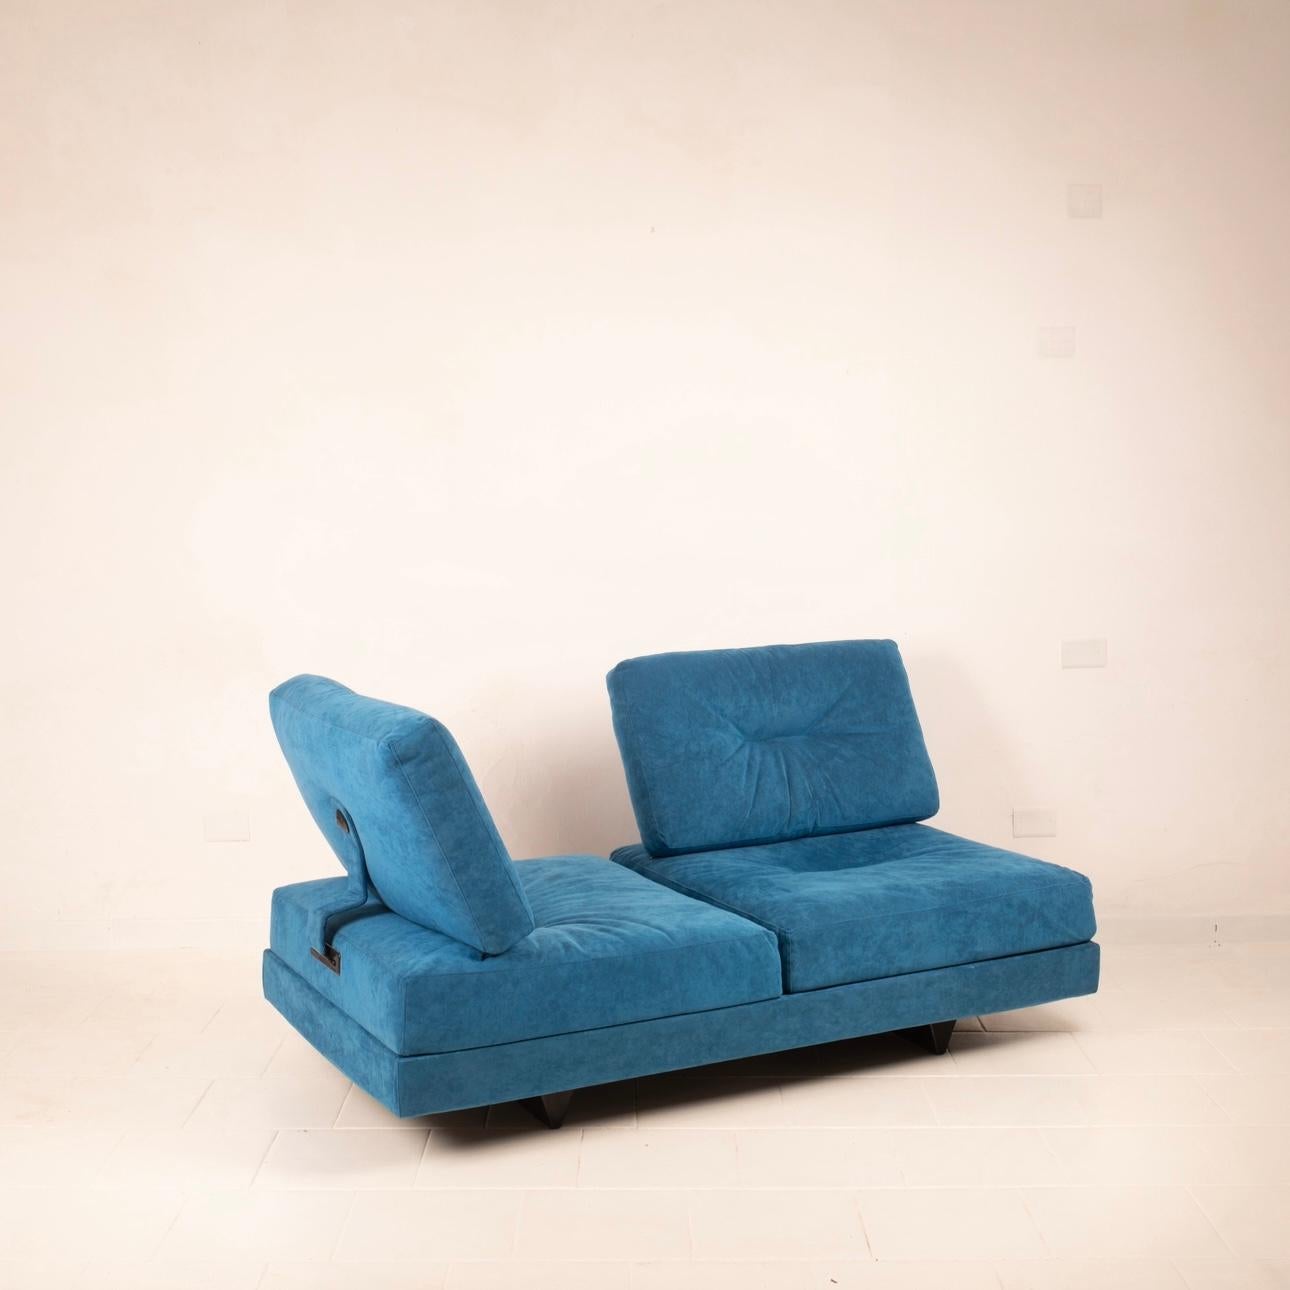 Stunning two-seater sofa model 